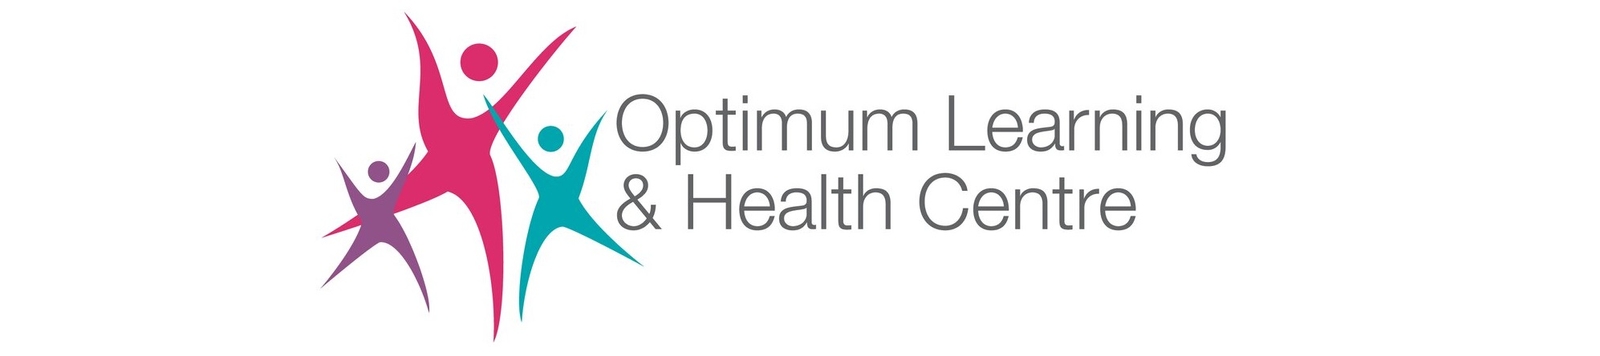 Optimum Learning & Health Centre